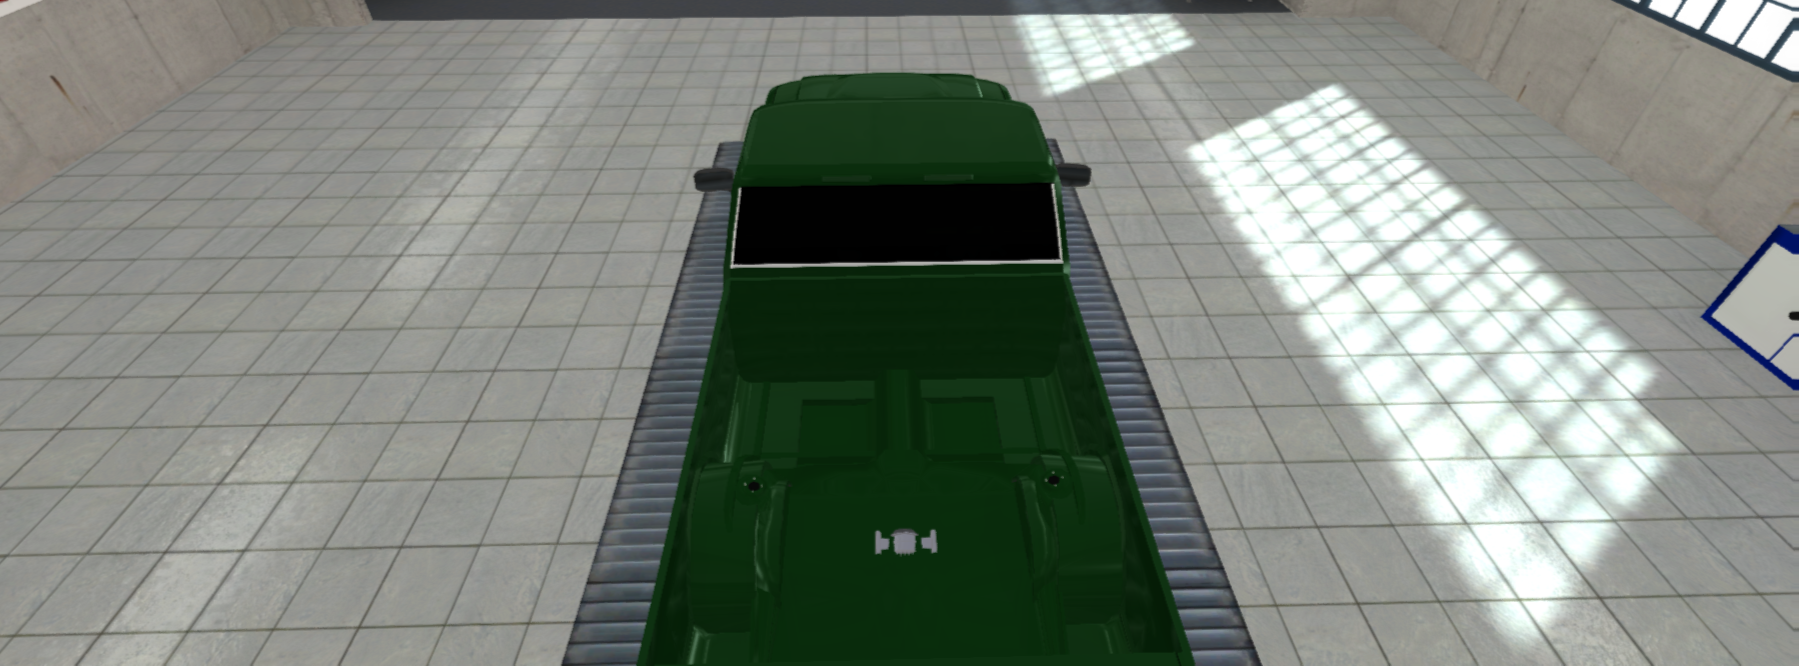 Car Model 2 - Car Trim 1-1.png